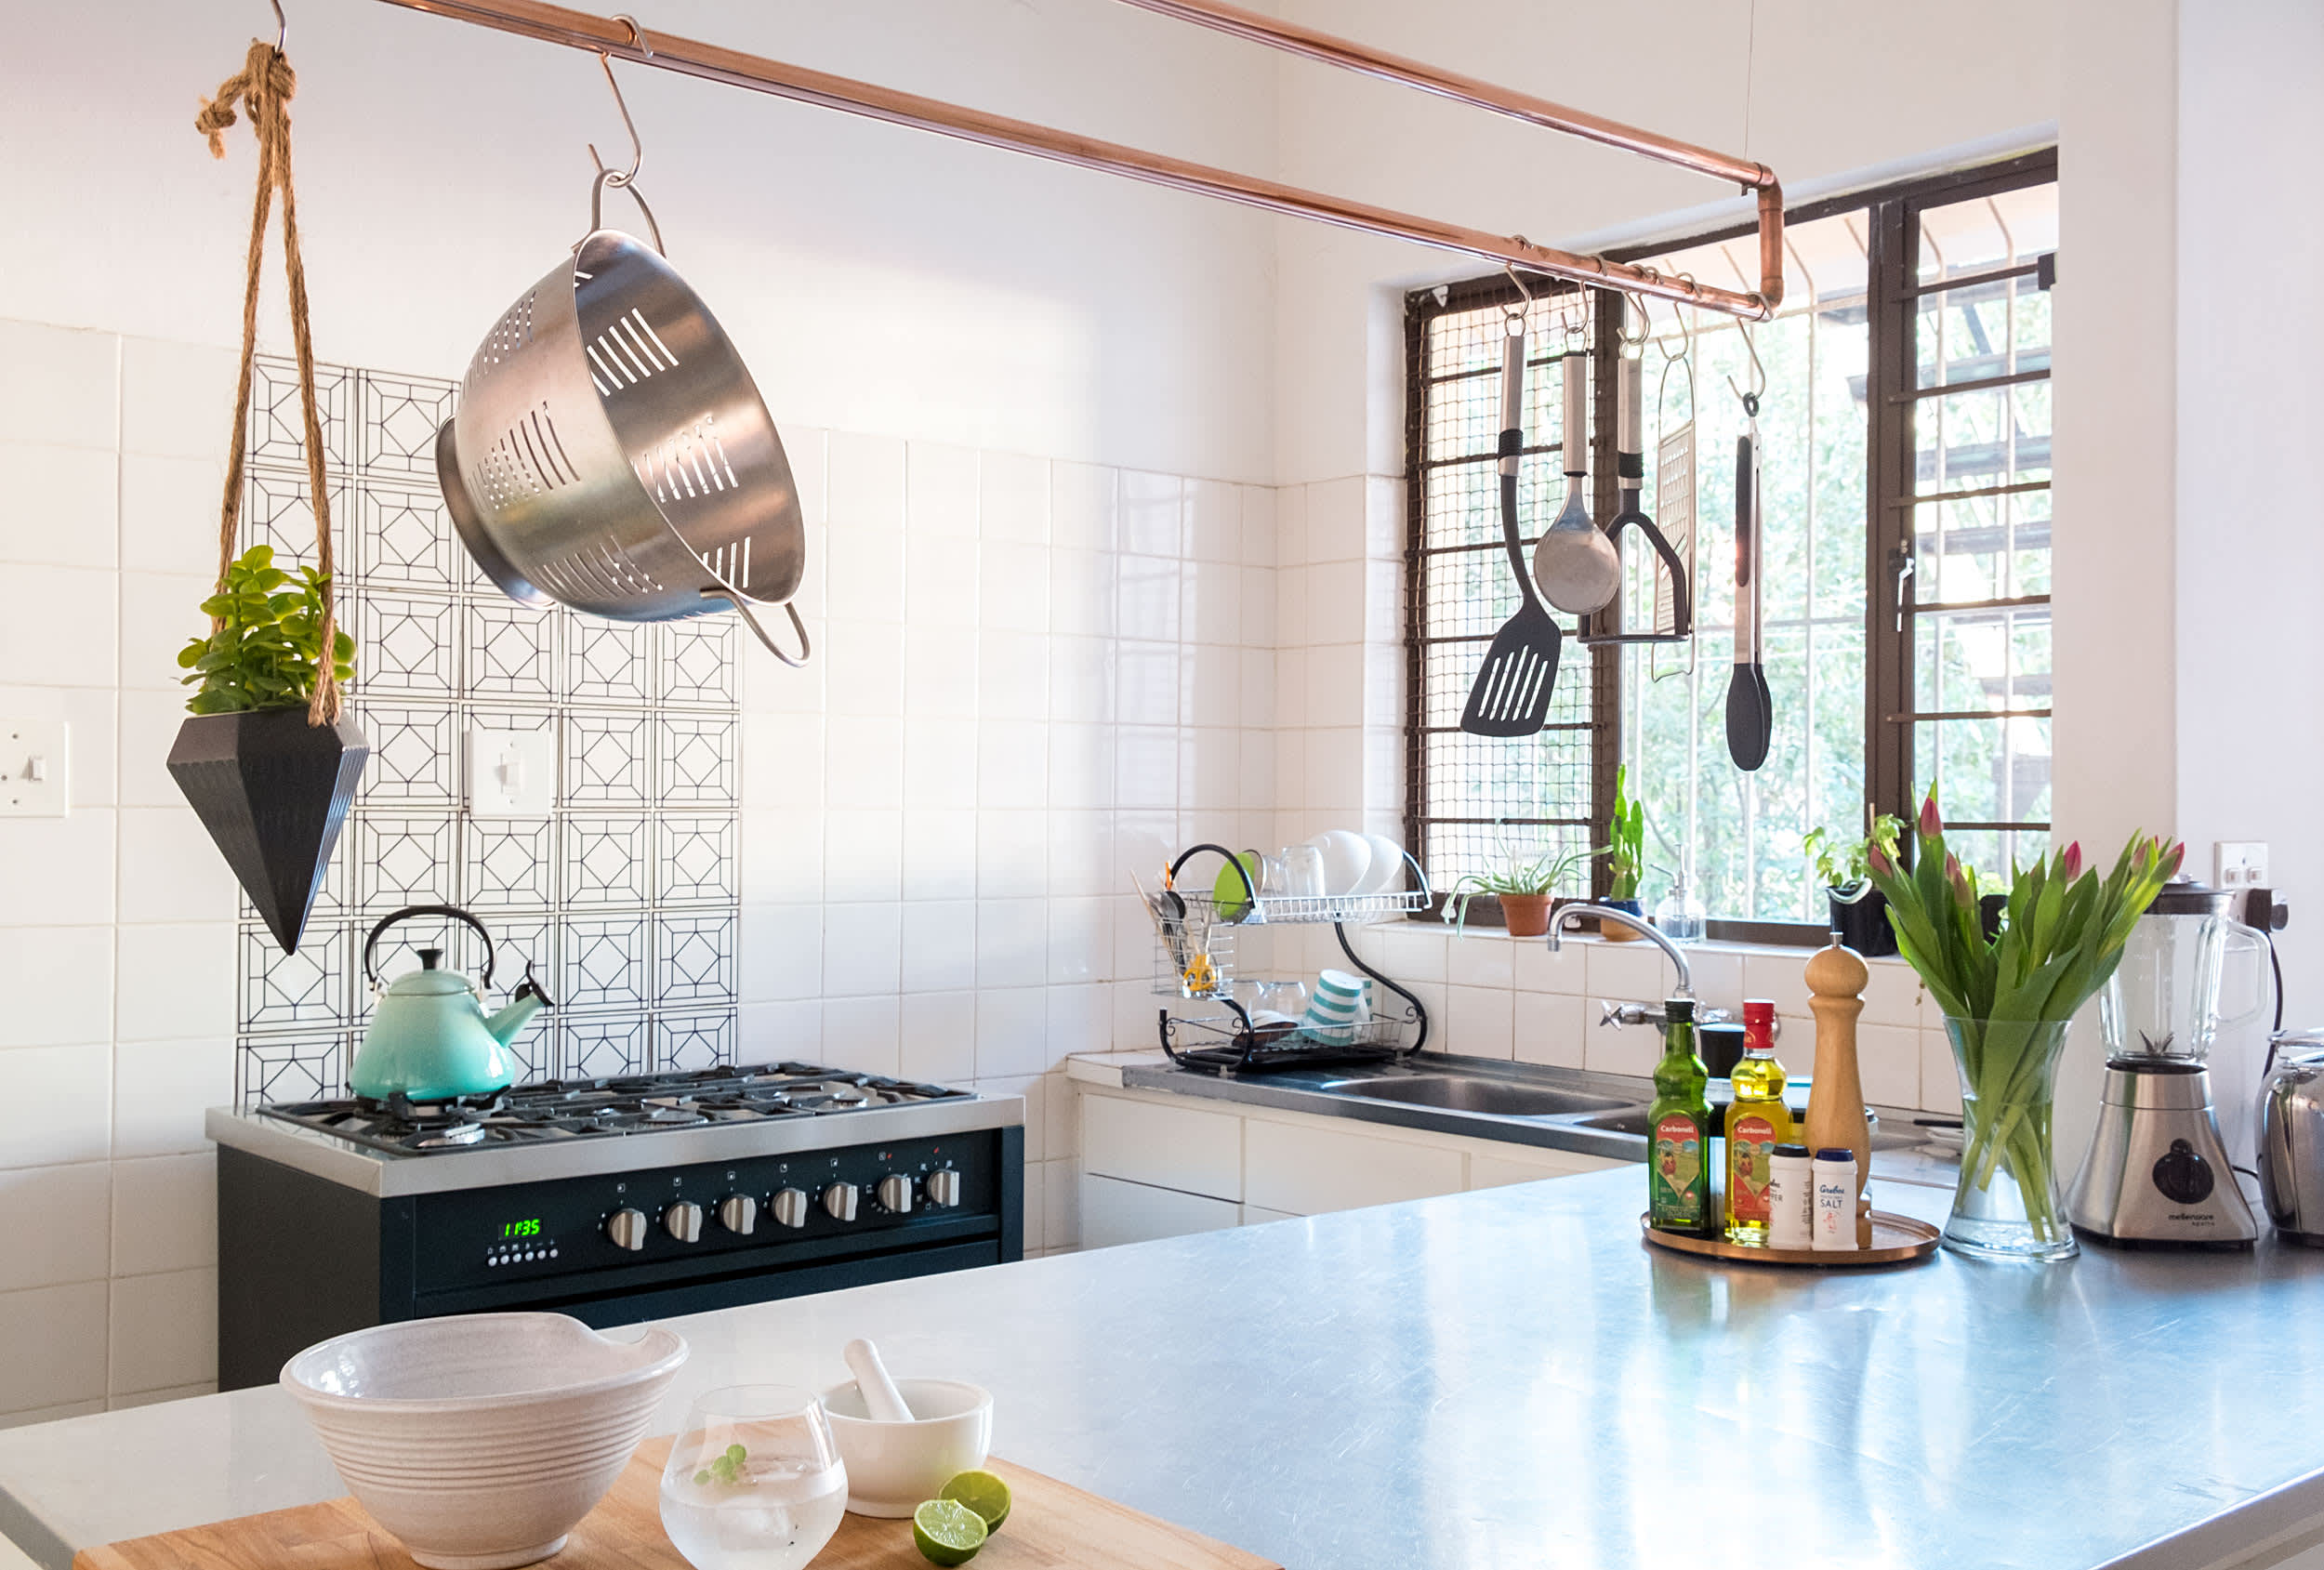 10 Inspiring Kitchens Organized with Glass Jars  Spring cleaning kitchen,  Kitchen inspirations, Diy kitchen